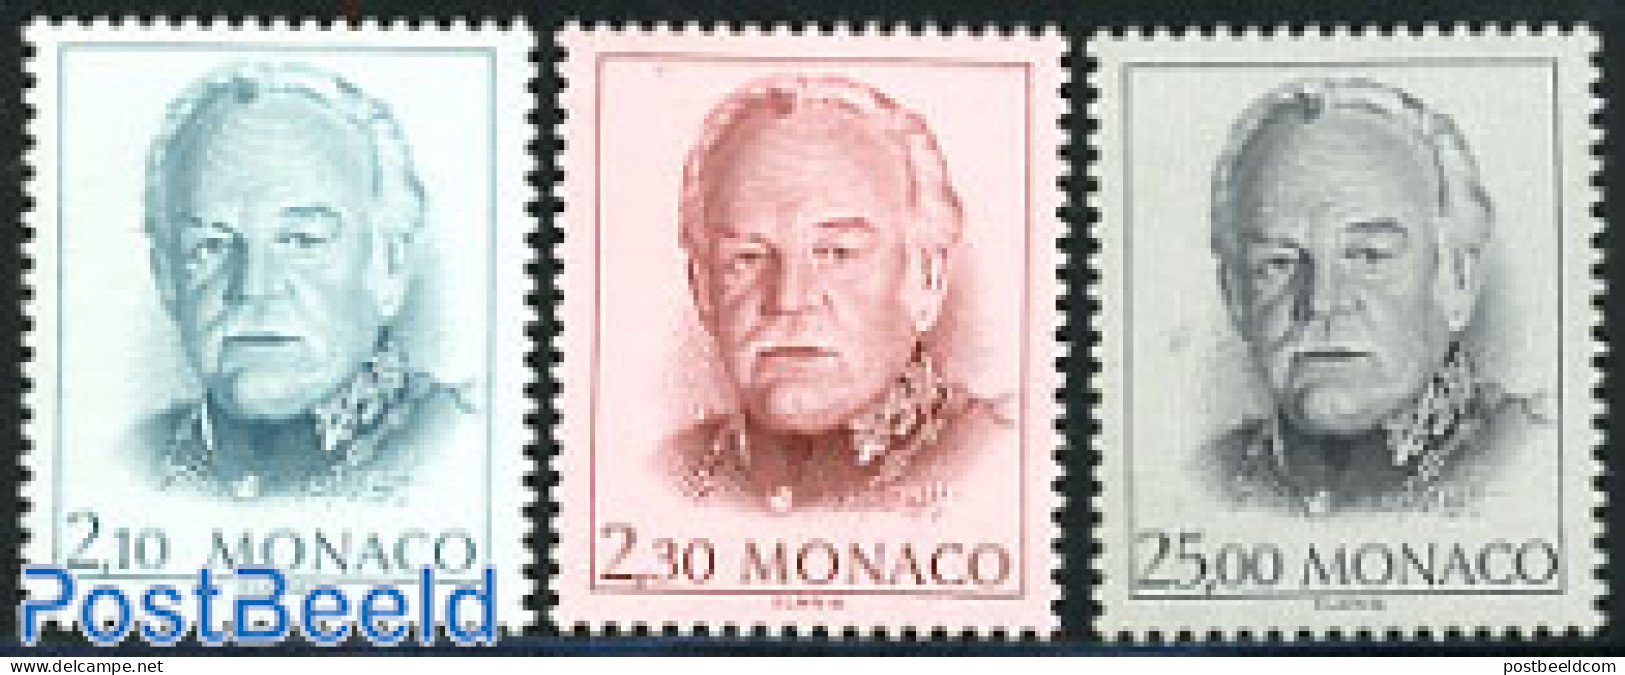 Monaco 1990 Definitives 3v, Mint NH - Unused Stamps